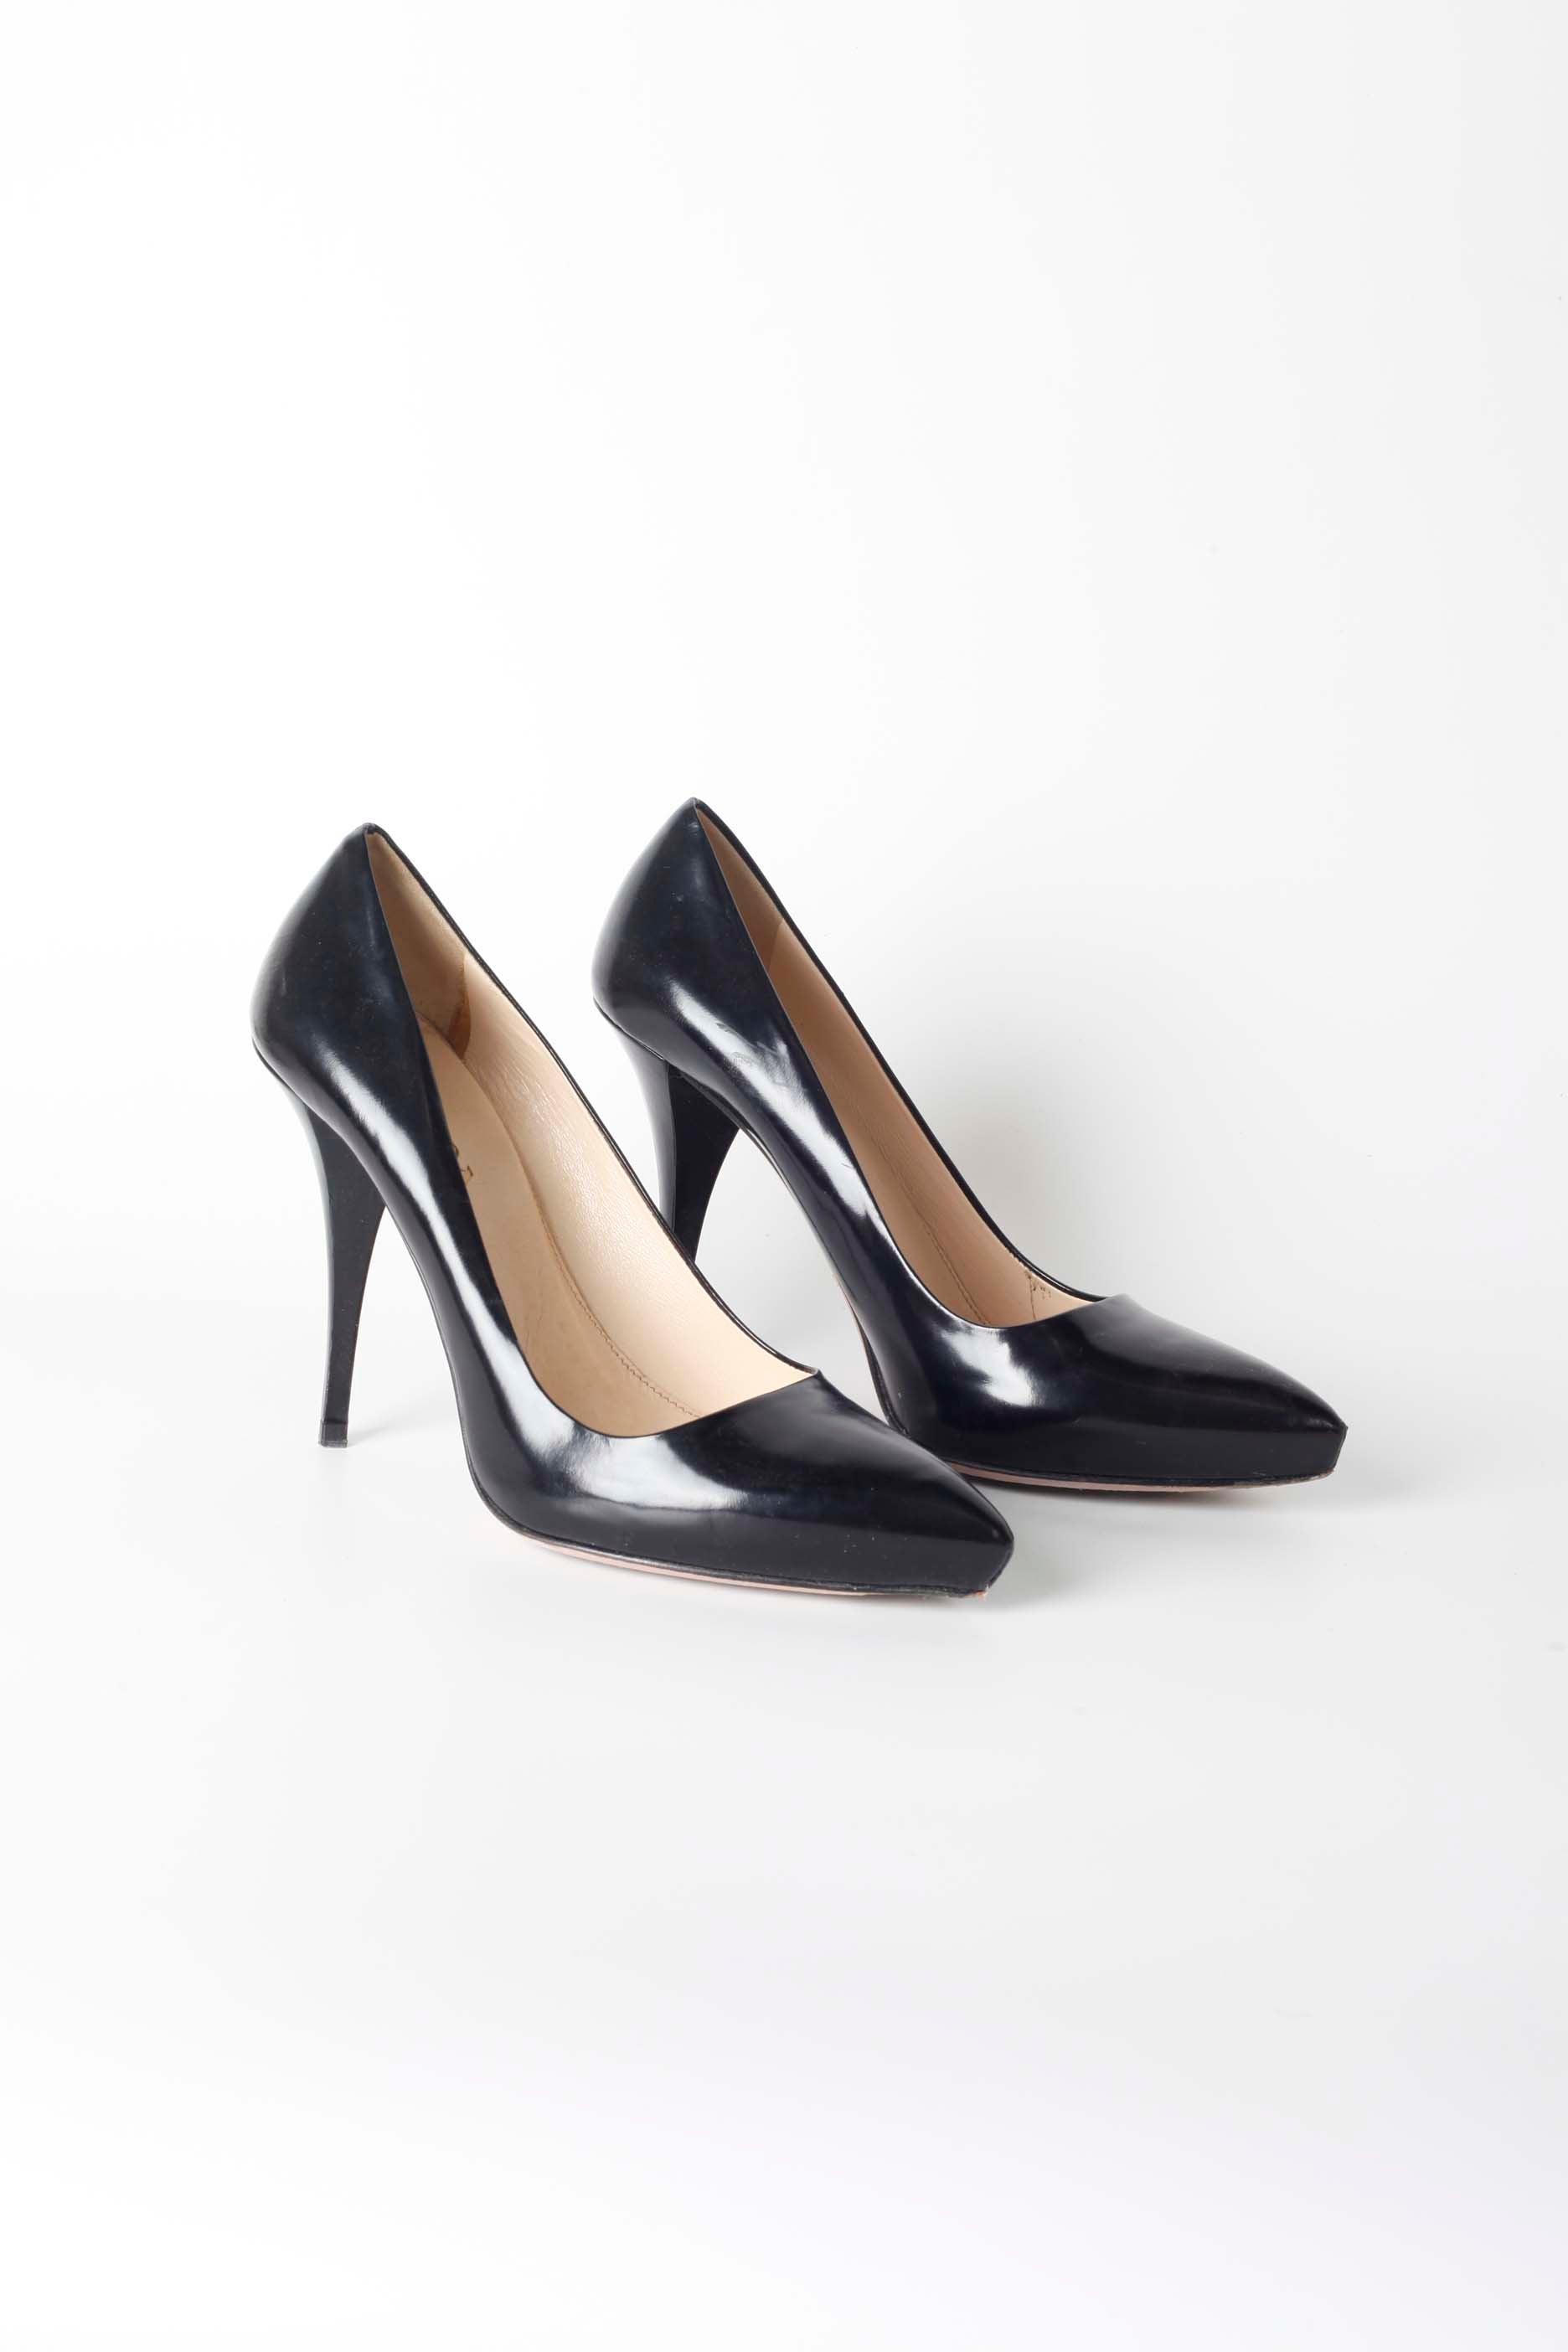 Black Patent Prada High Heels